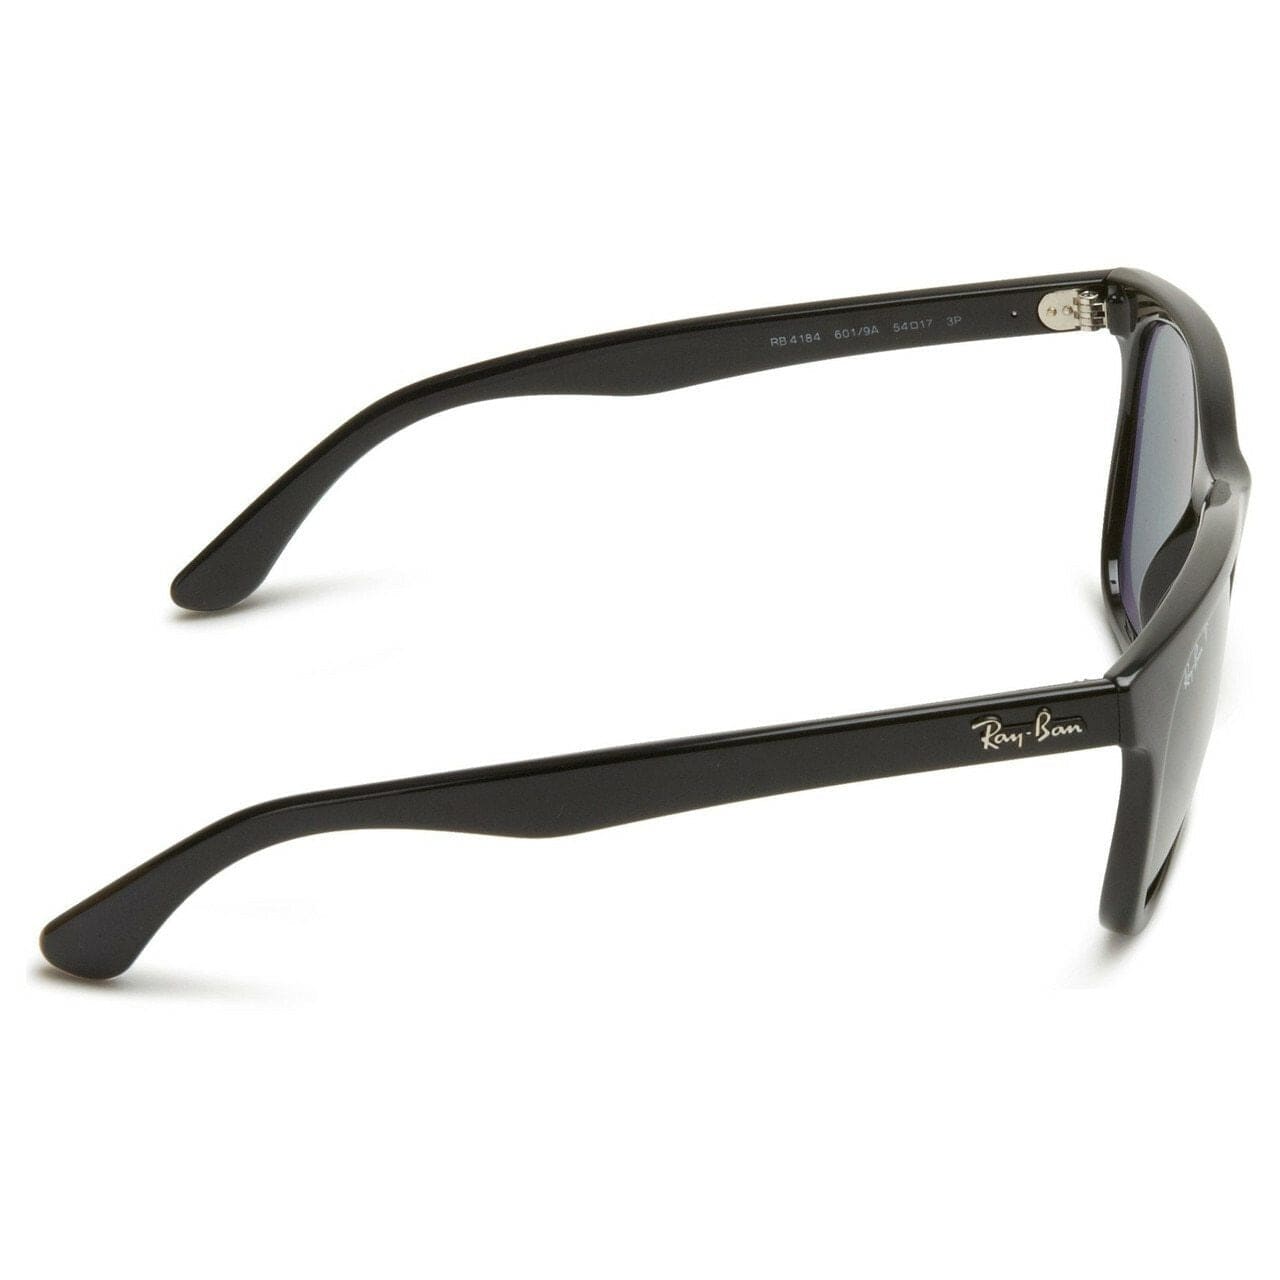 Ray-Ban RB4184 601/9A Hightstreet Sunglasses Black Frame Polarized Green Classic G-15 Lens